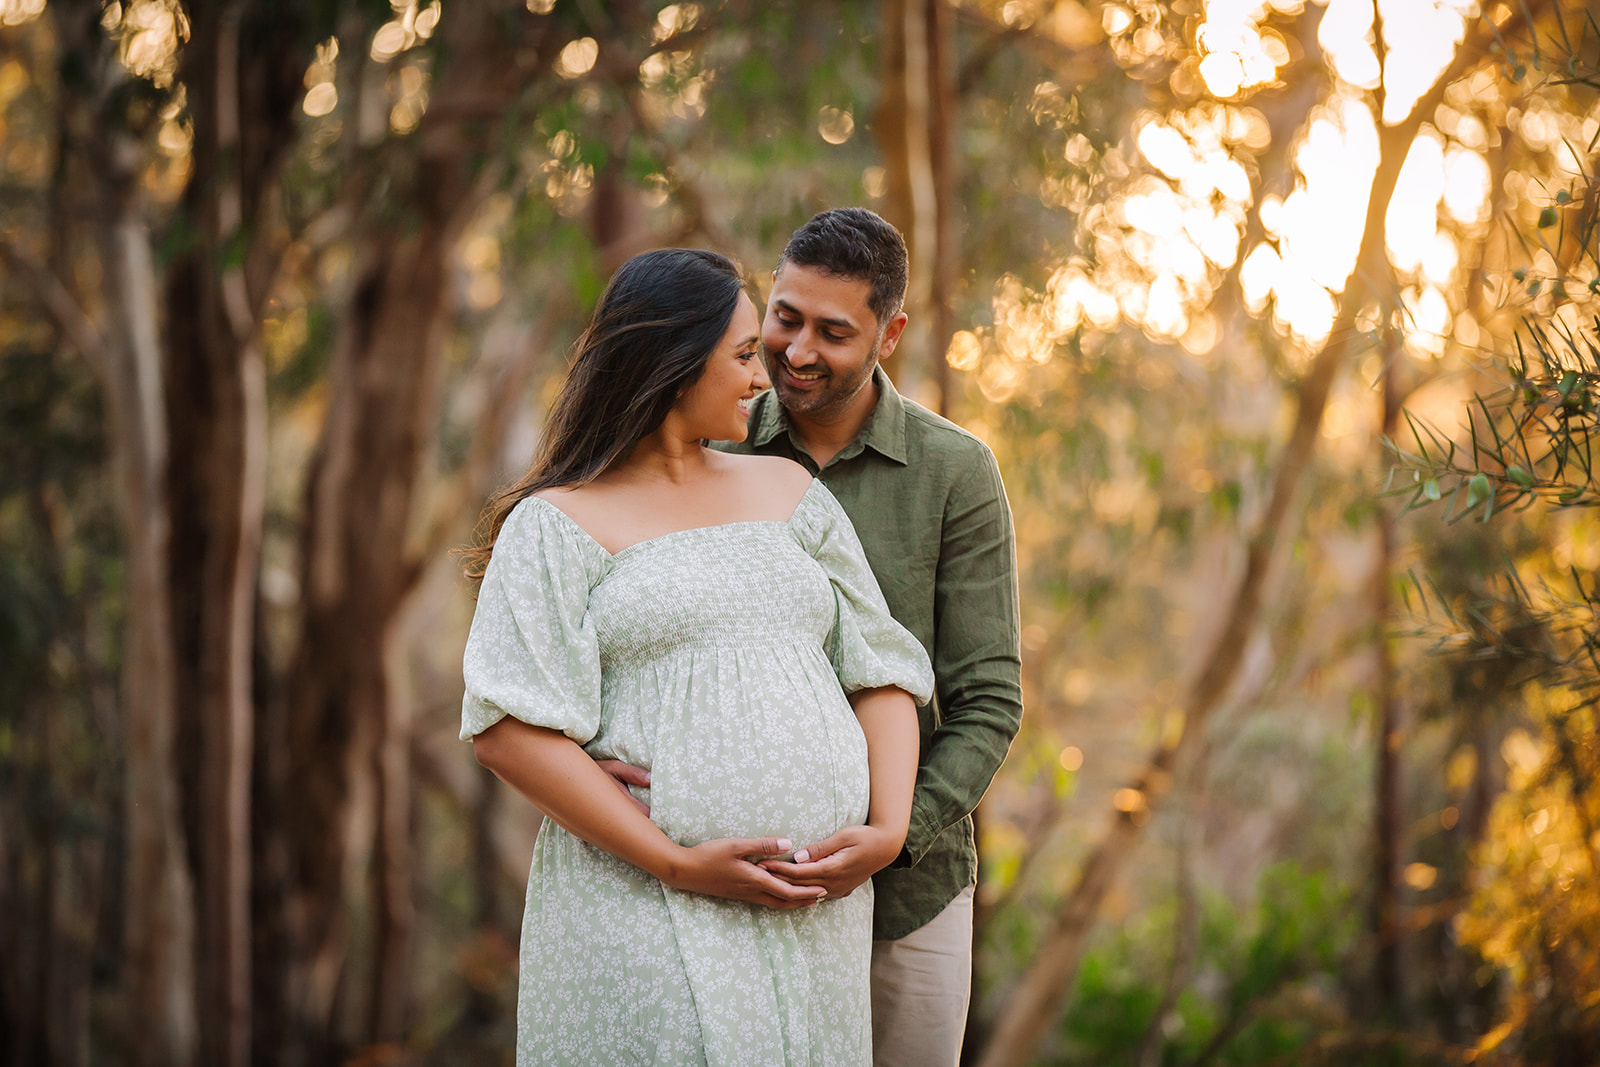 Sydney pregnancy photos